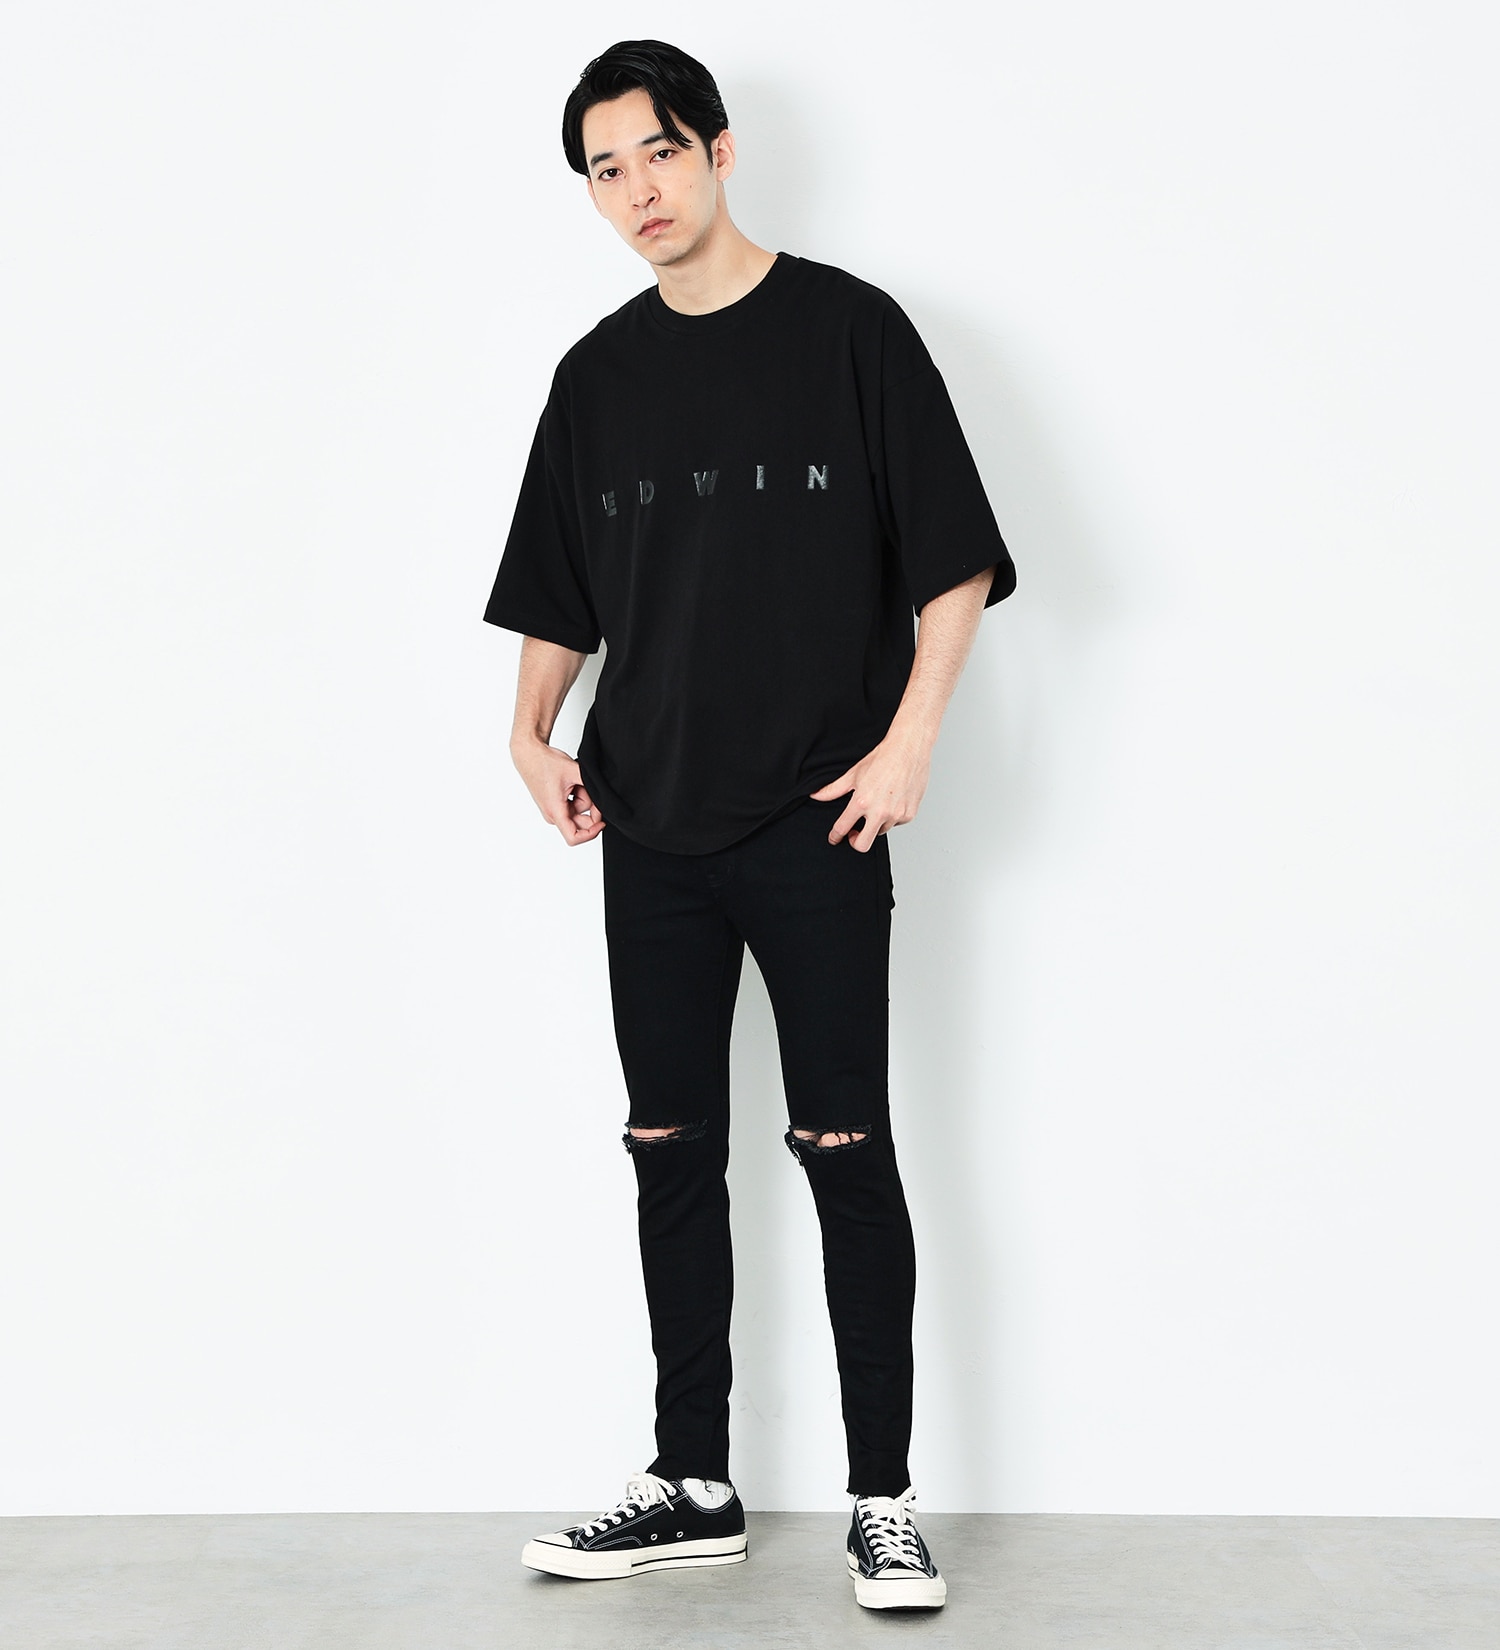 EDWIN(エドウイン)の【試着対象】A KIND OF BLACK BIG FIT Tシャツ|トップス/Tシャツ/カットソー/メンズ|ブラック